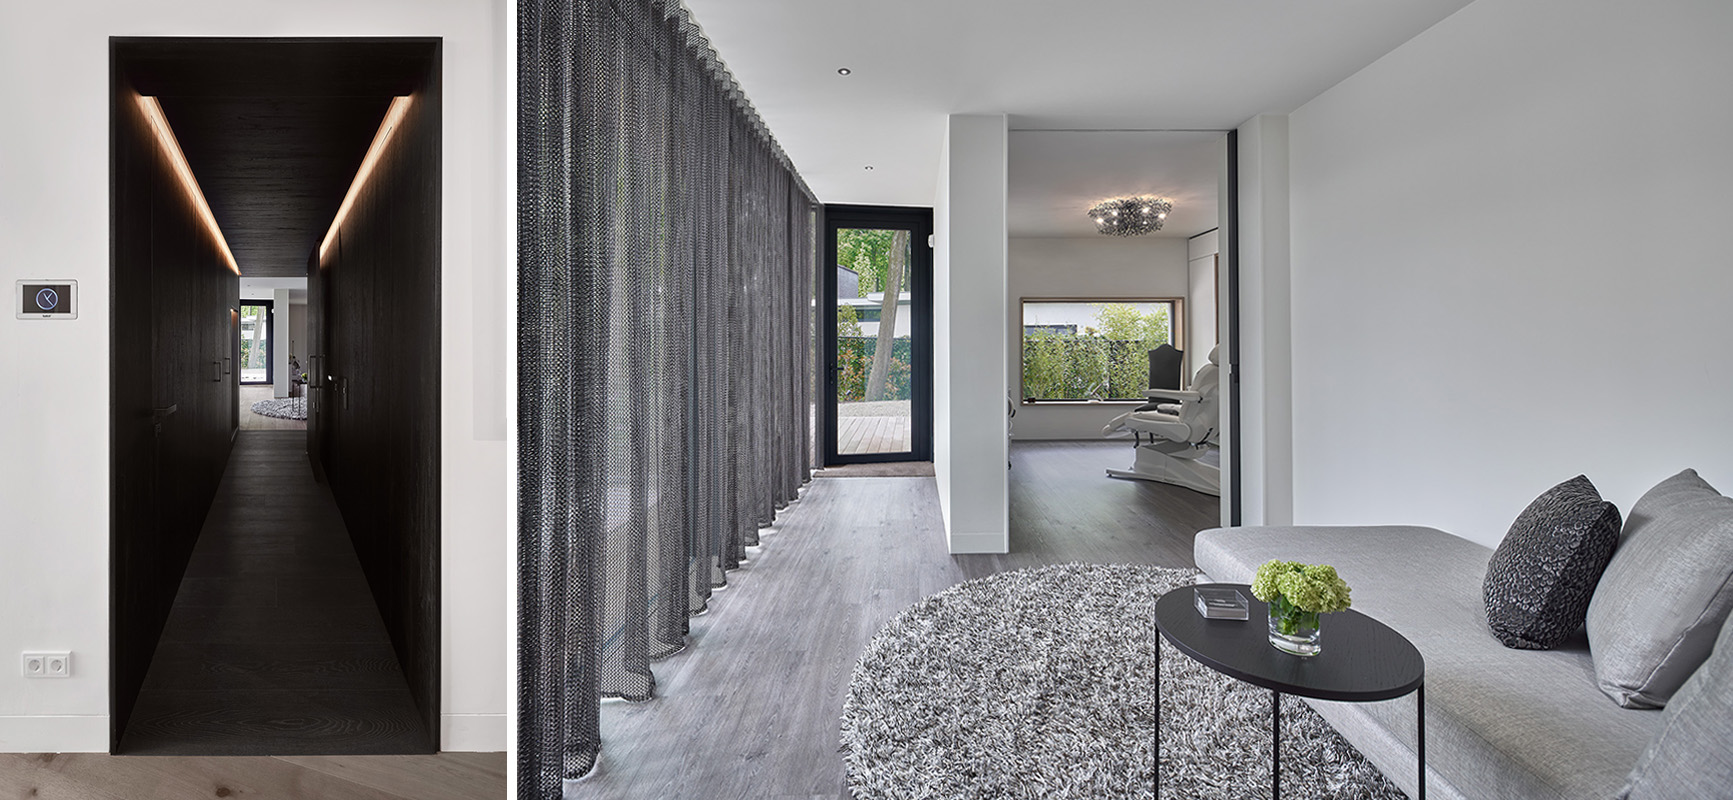 Villa custom interior | Eindhoven (NL) - Residential Interior Design